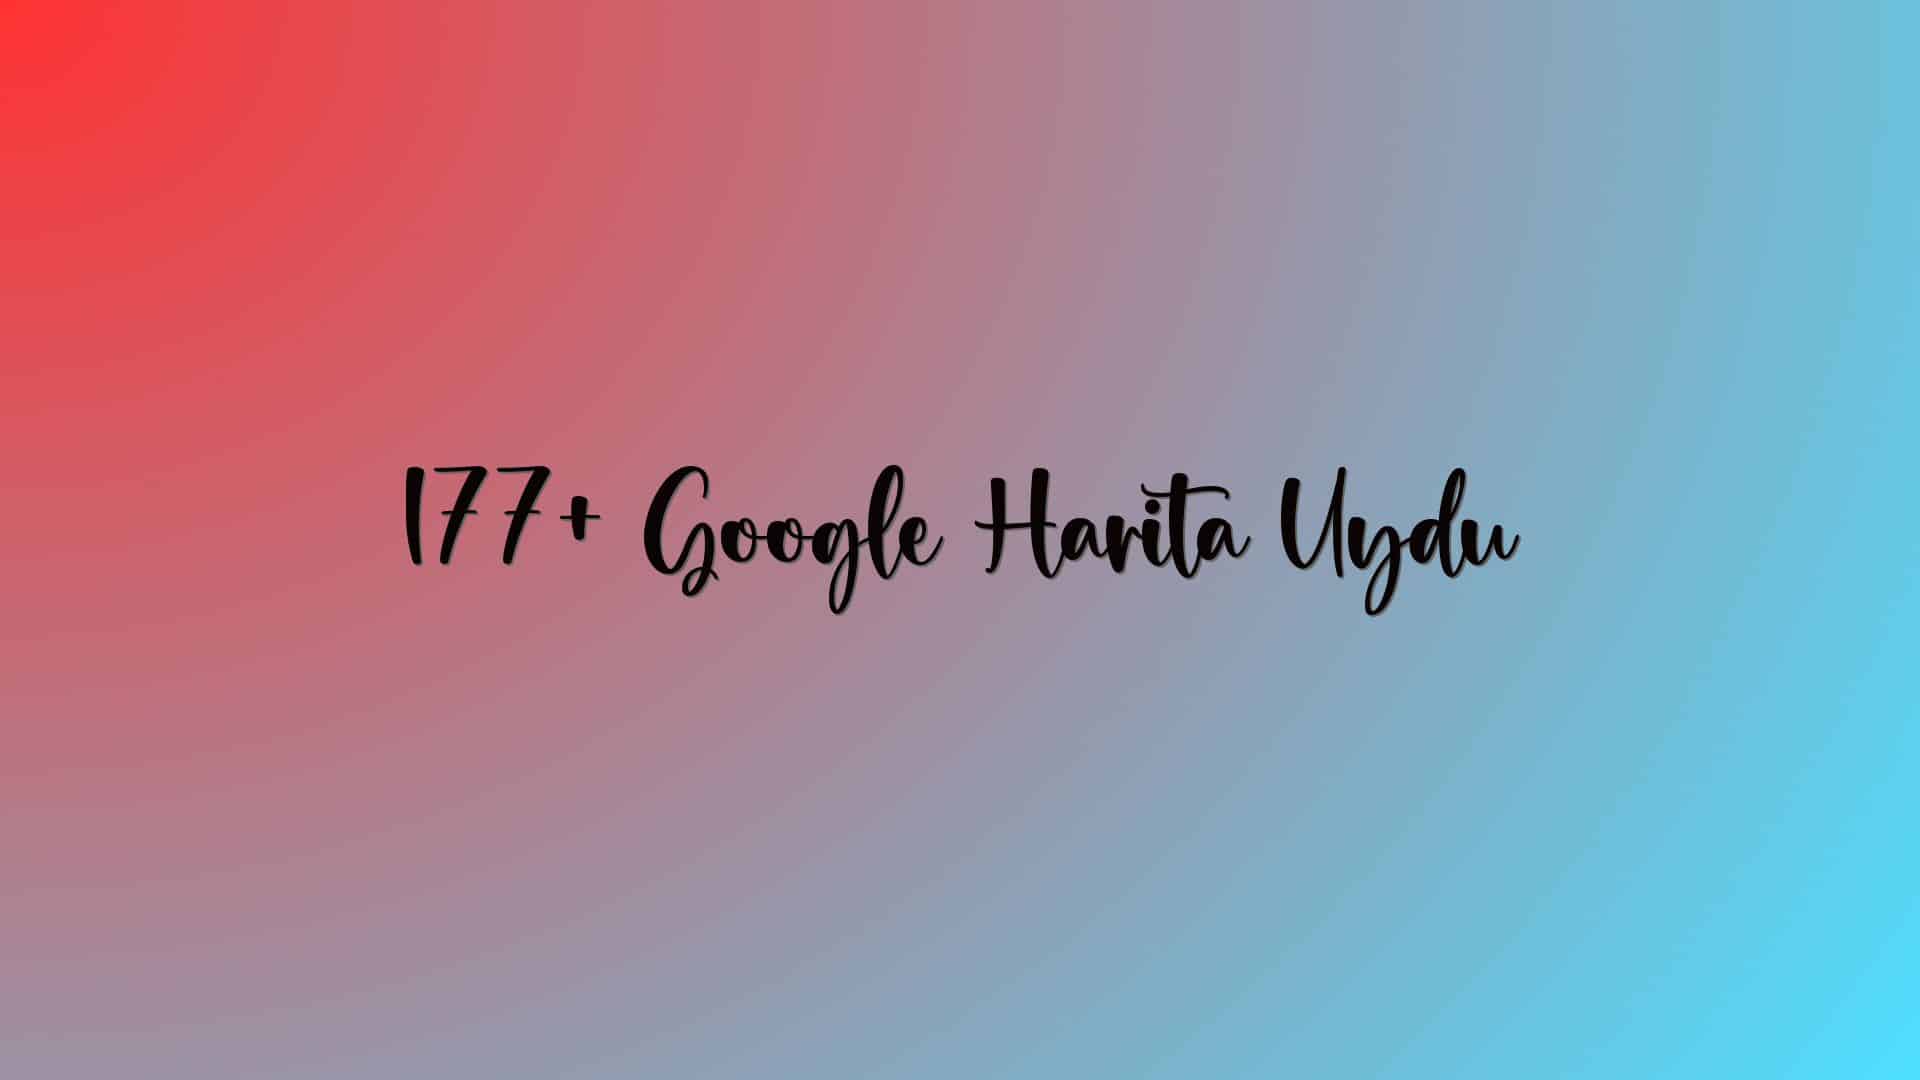 177+ Google Harita Uydu